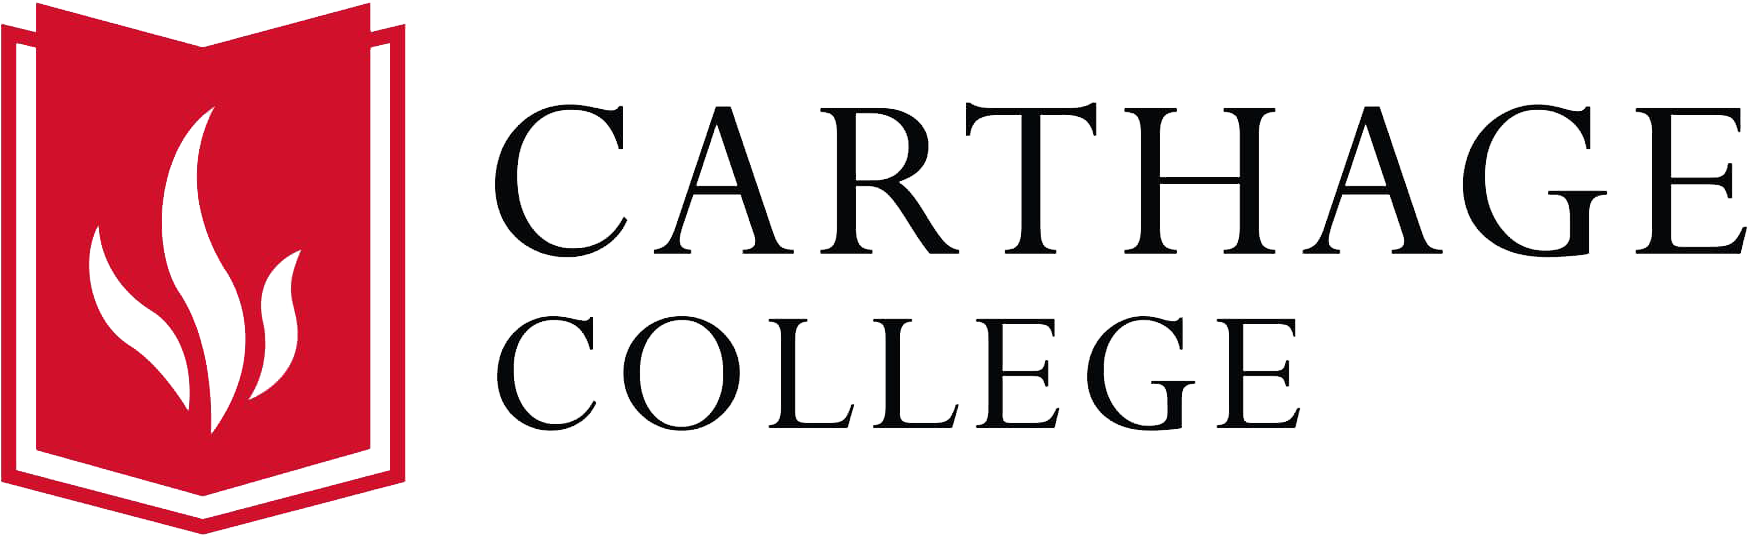 Carthage College logo